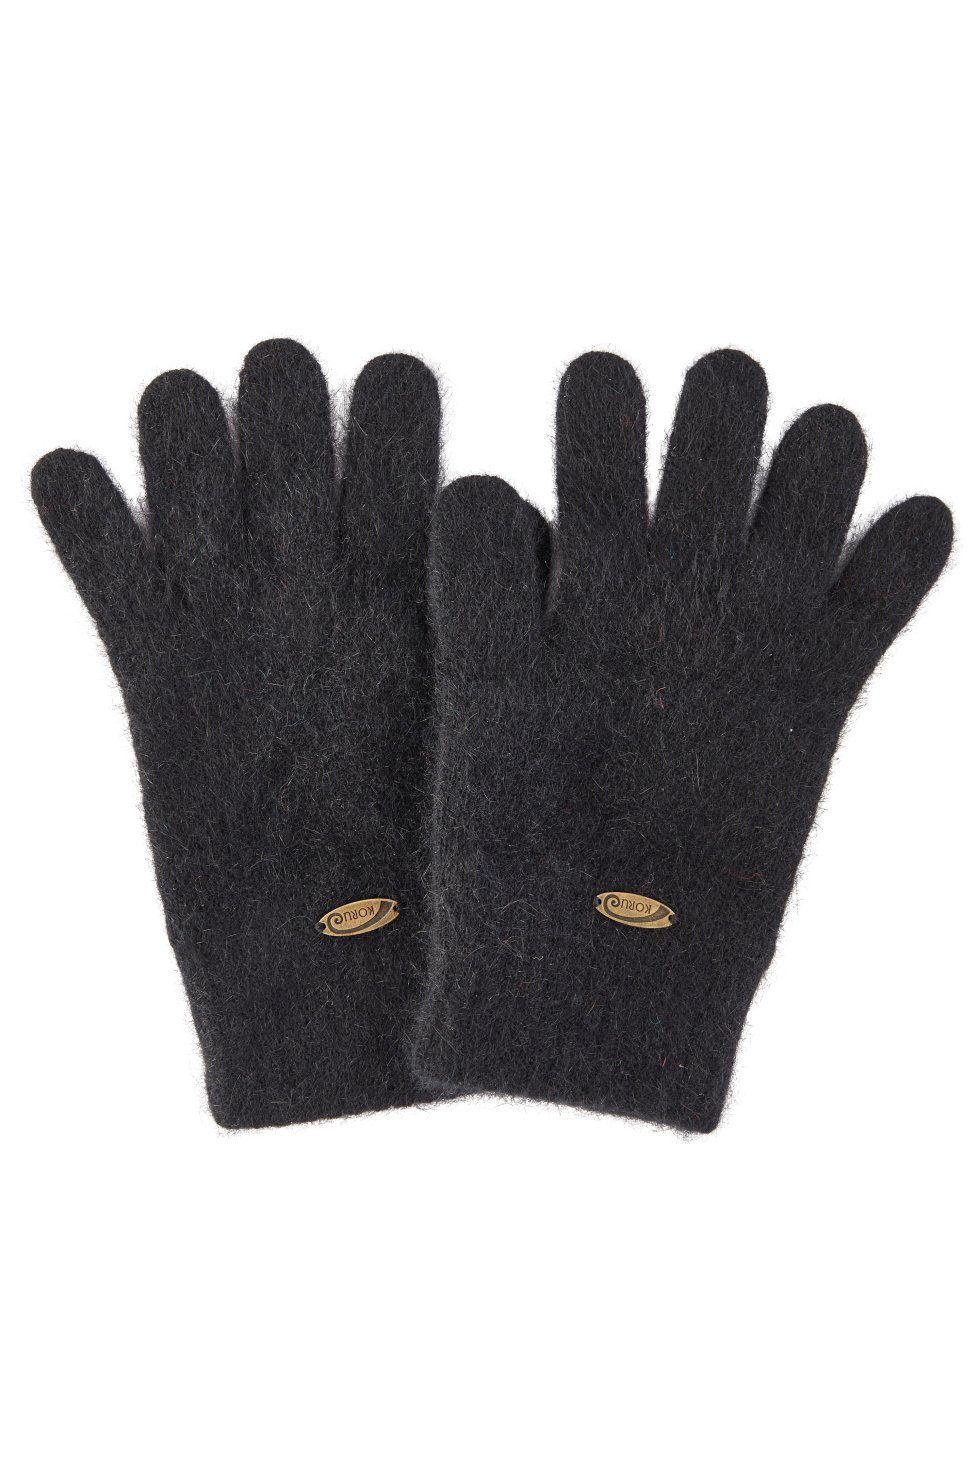 Koru der Possumhaarfaser schwarz Knitwear Handschuhe Strickhandschuhe aus